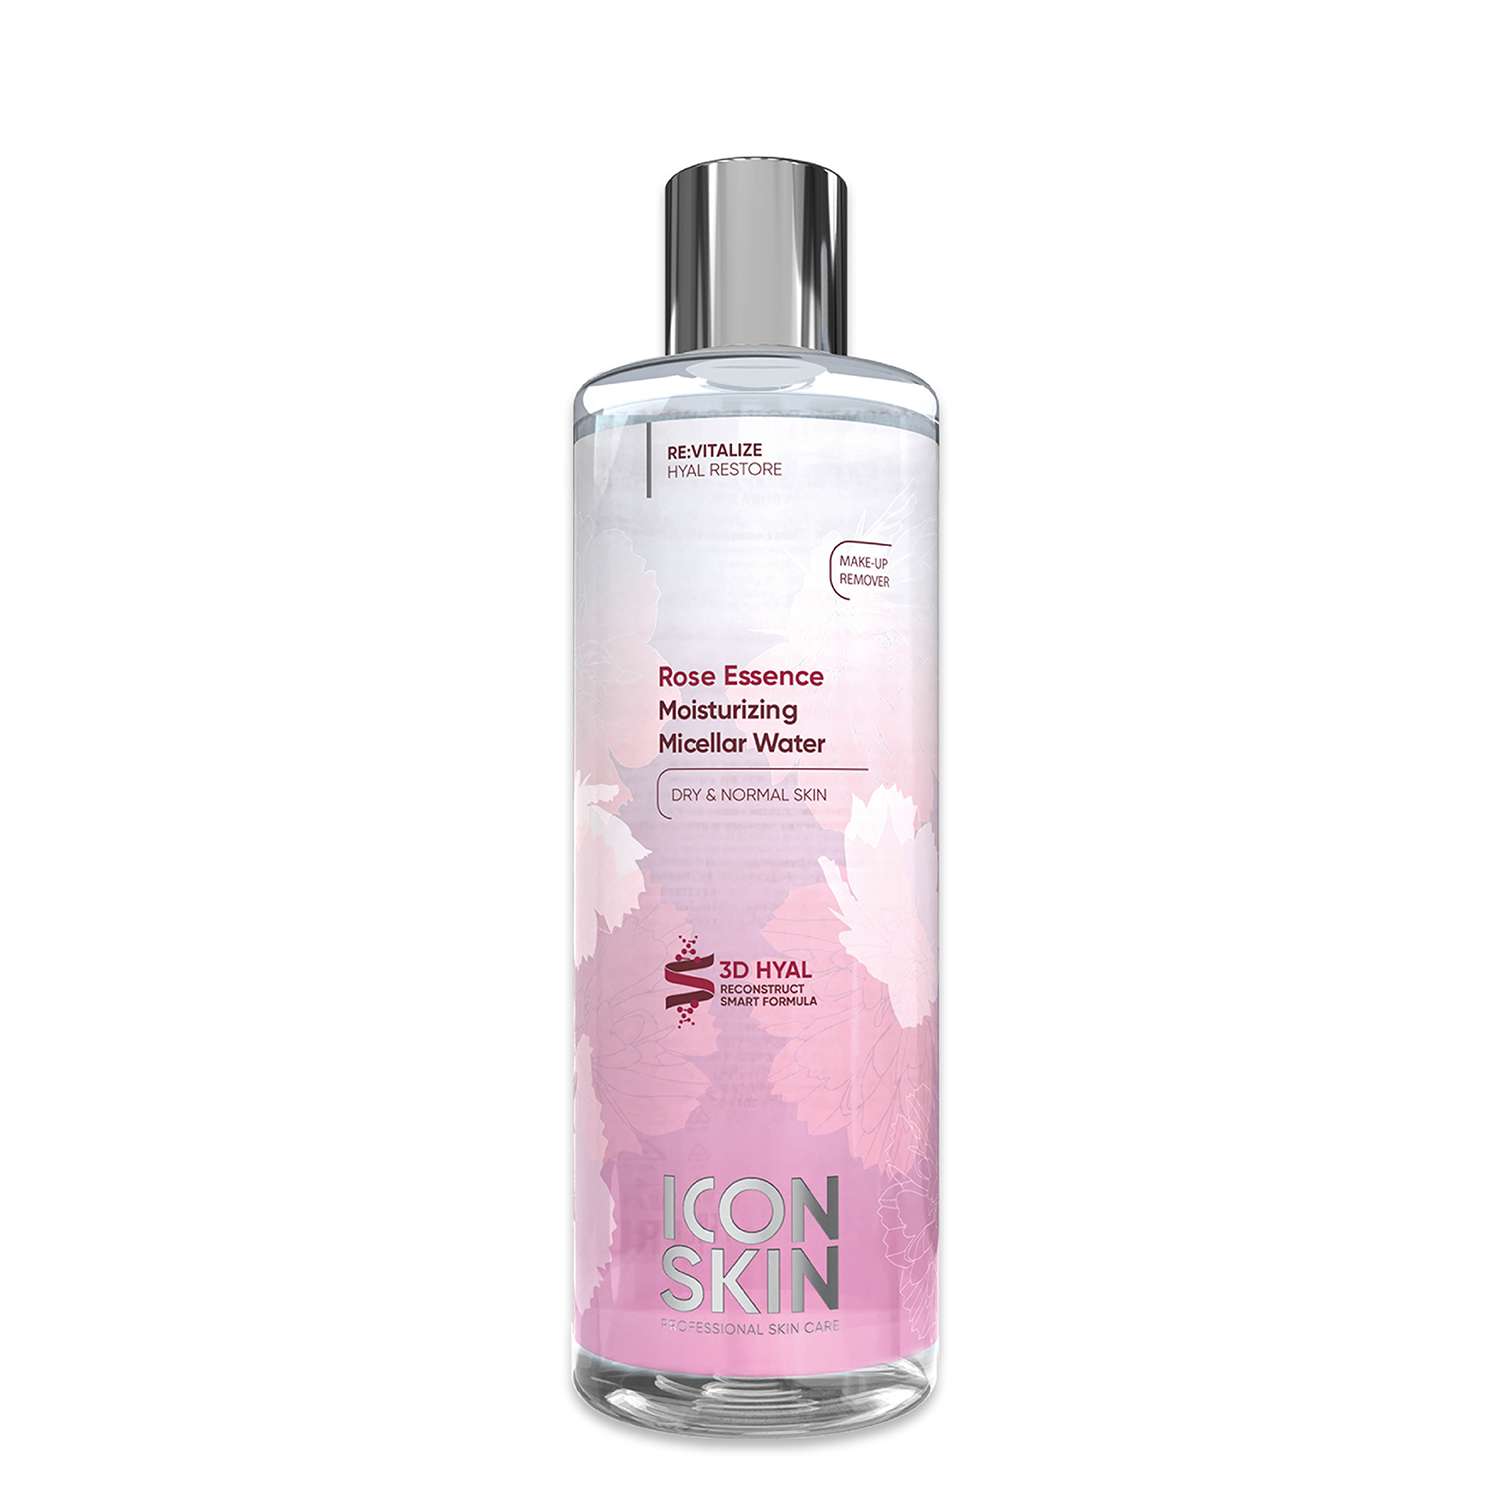 Мицеллярная вода ICON SKIN увлажняющая rose essence 400 мл - фото 1